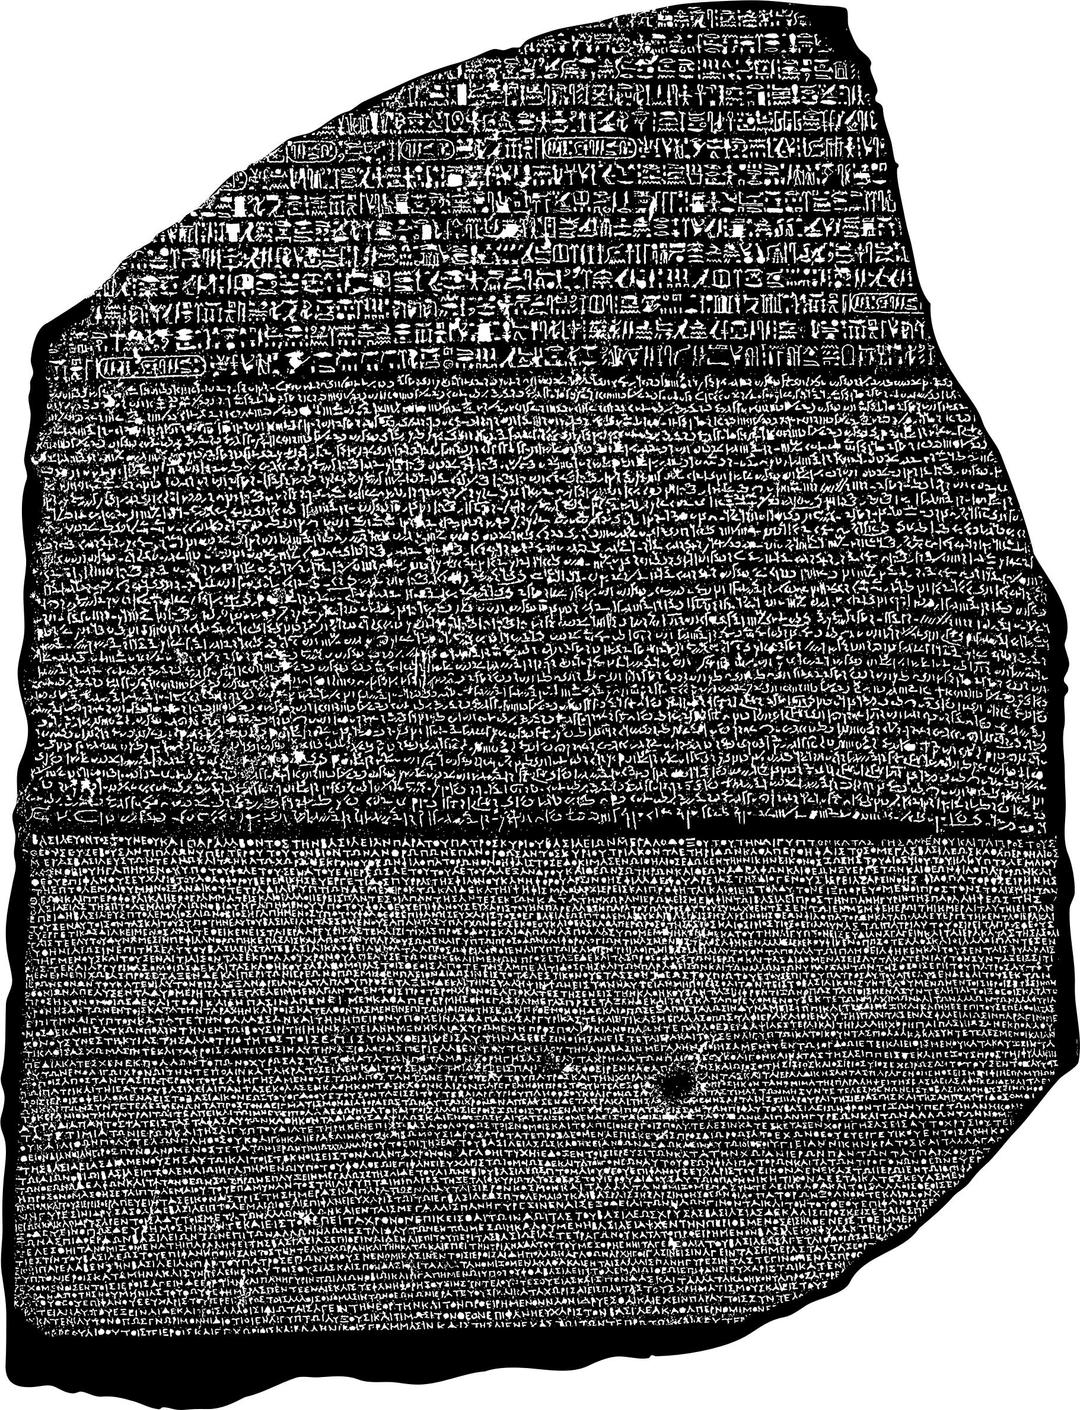 The Rosetta Stone png transparent